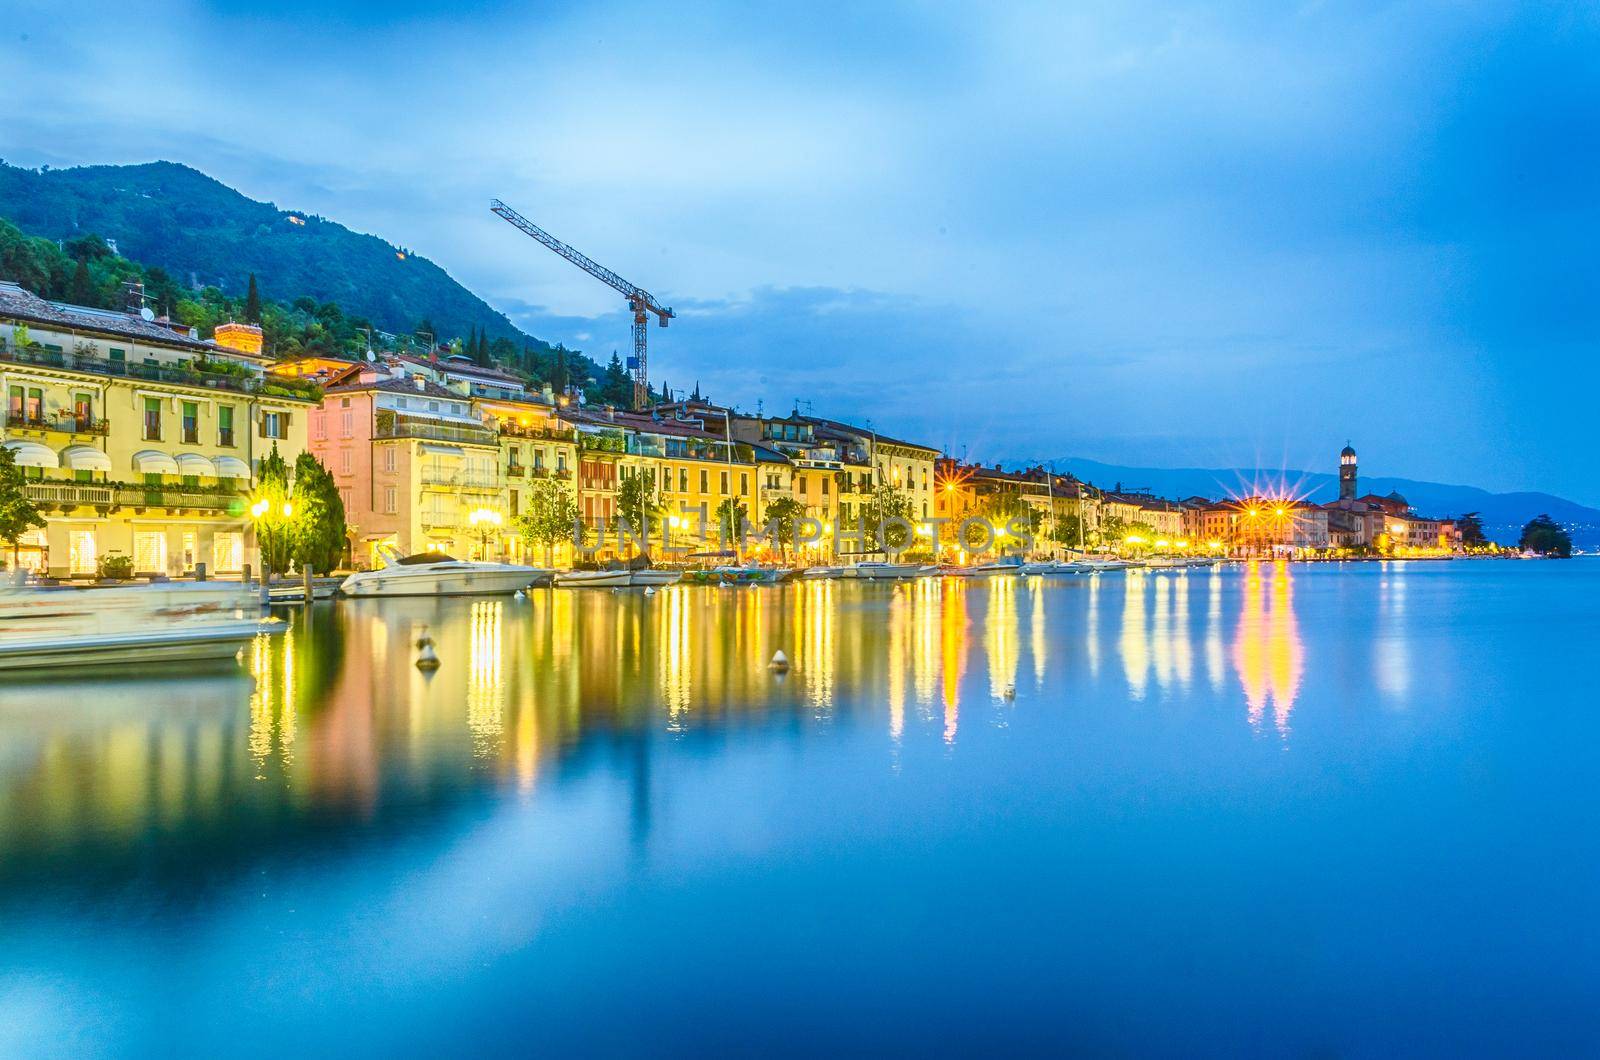 View of Salo Town, Lake Garda, Italy by marcorubino